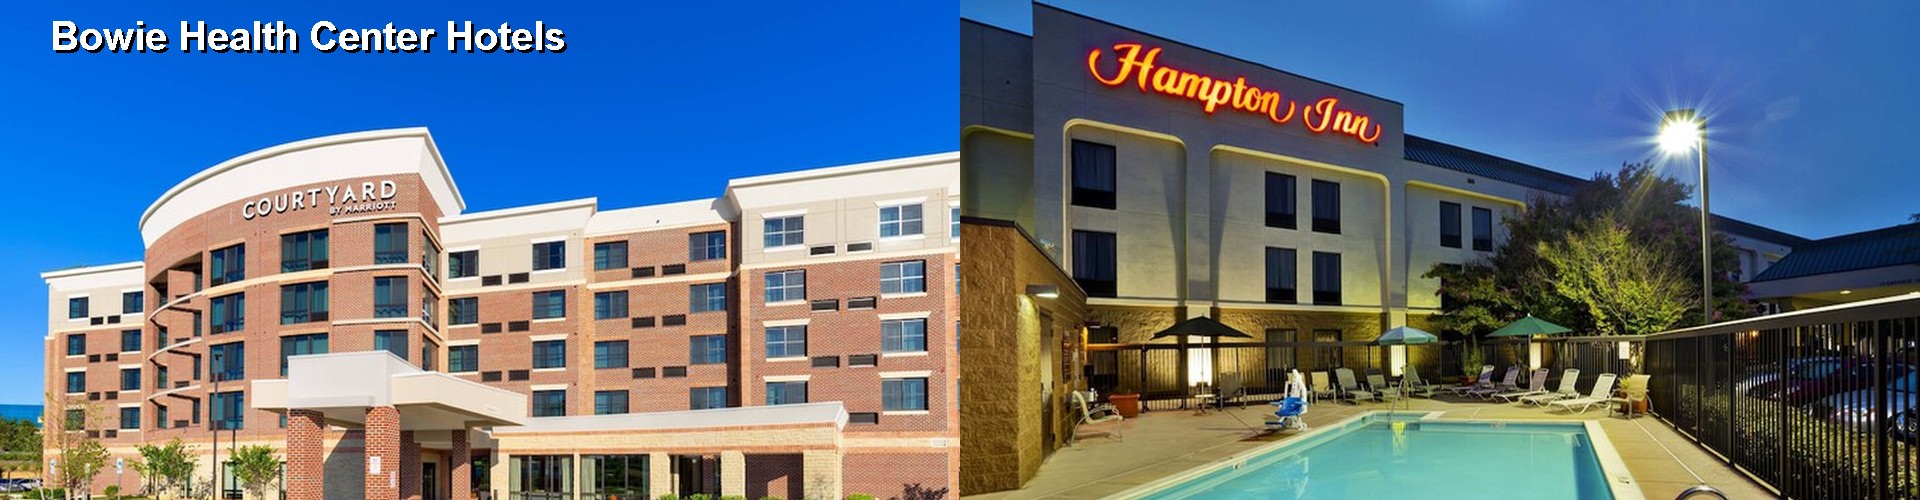 5 Best Hotels near Bowie Health Center